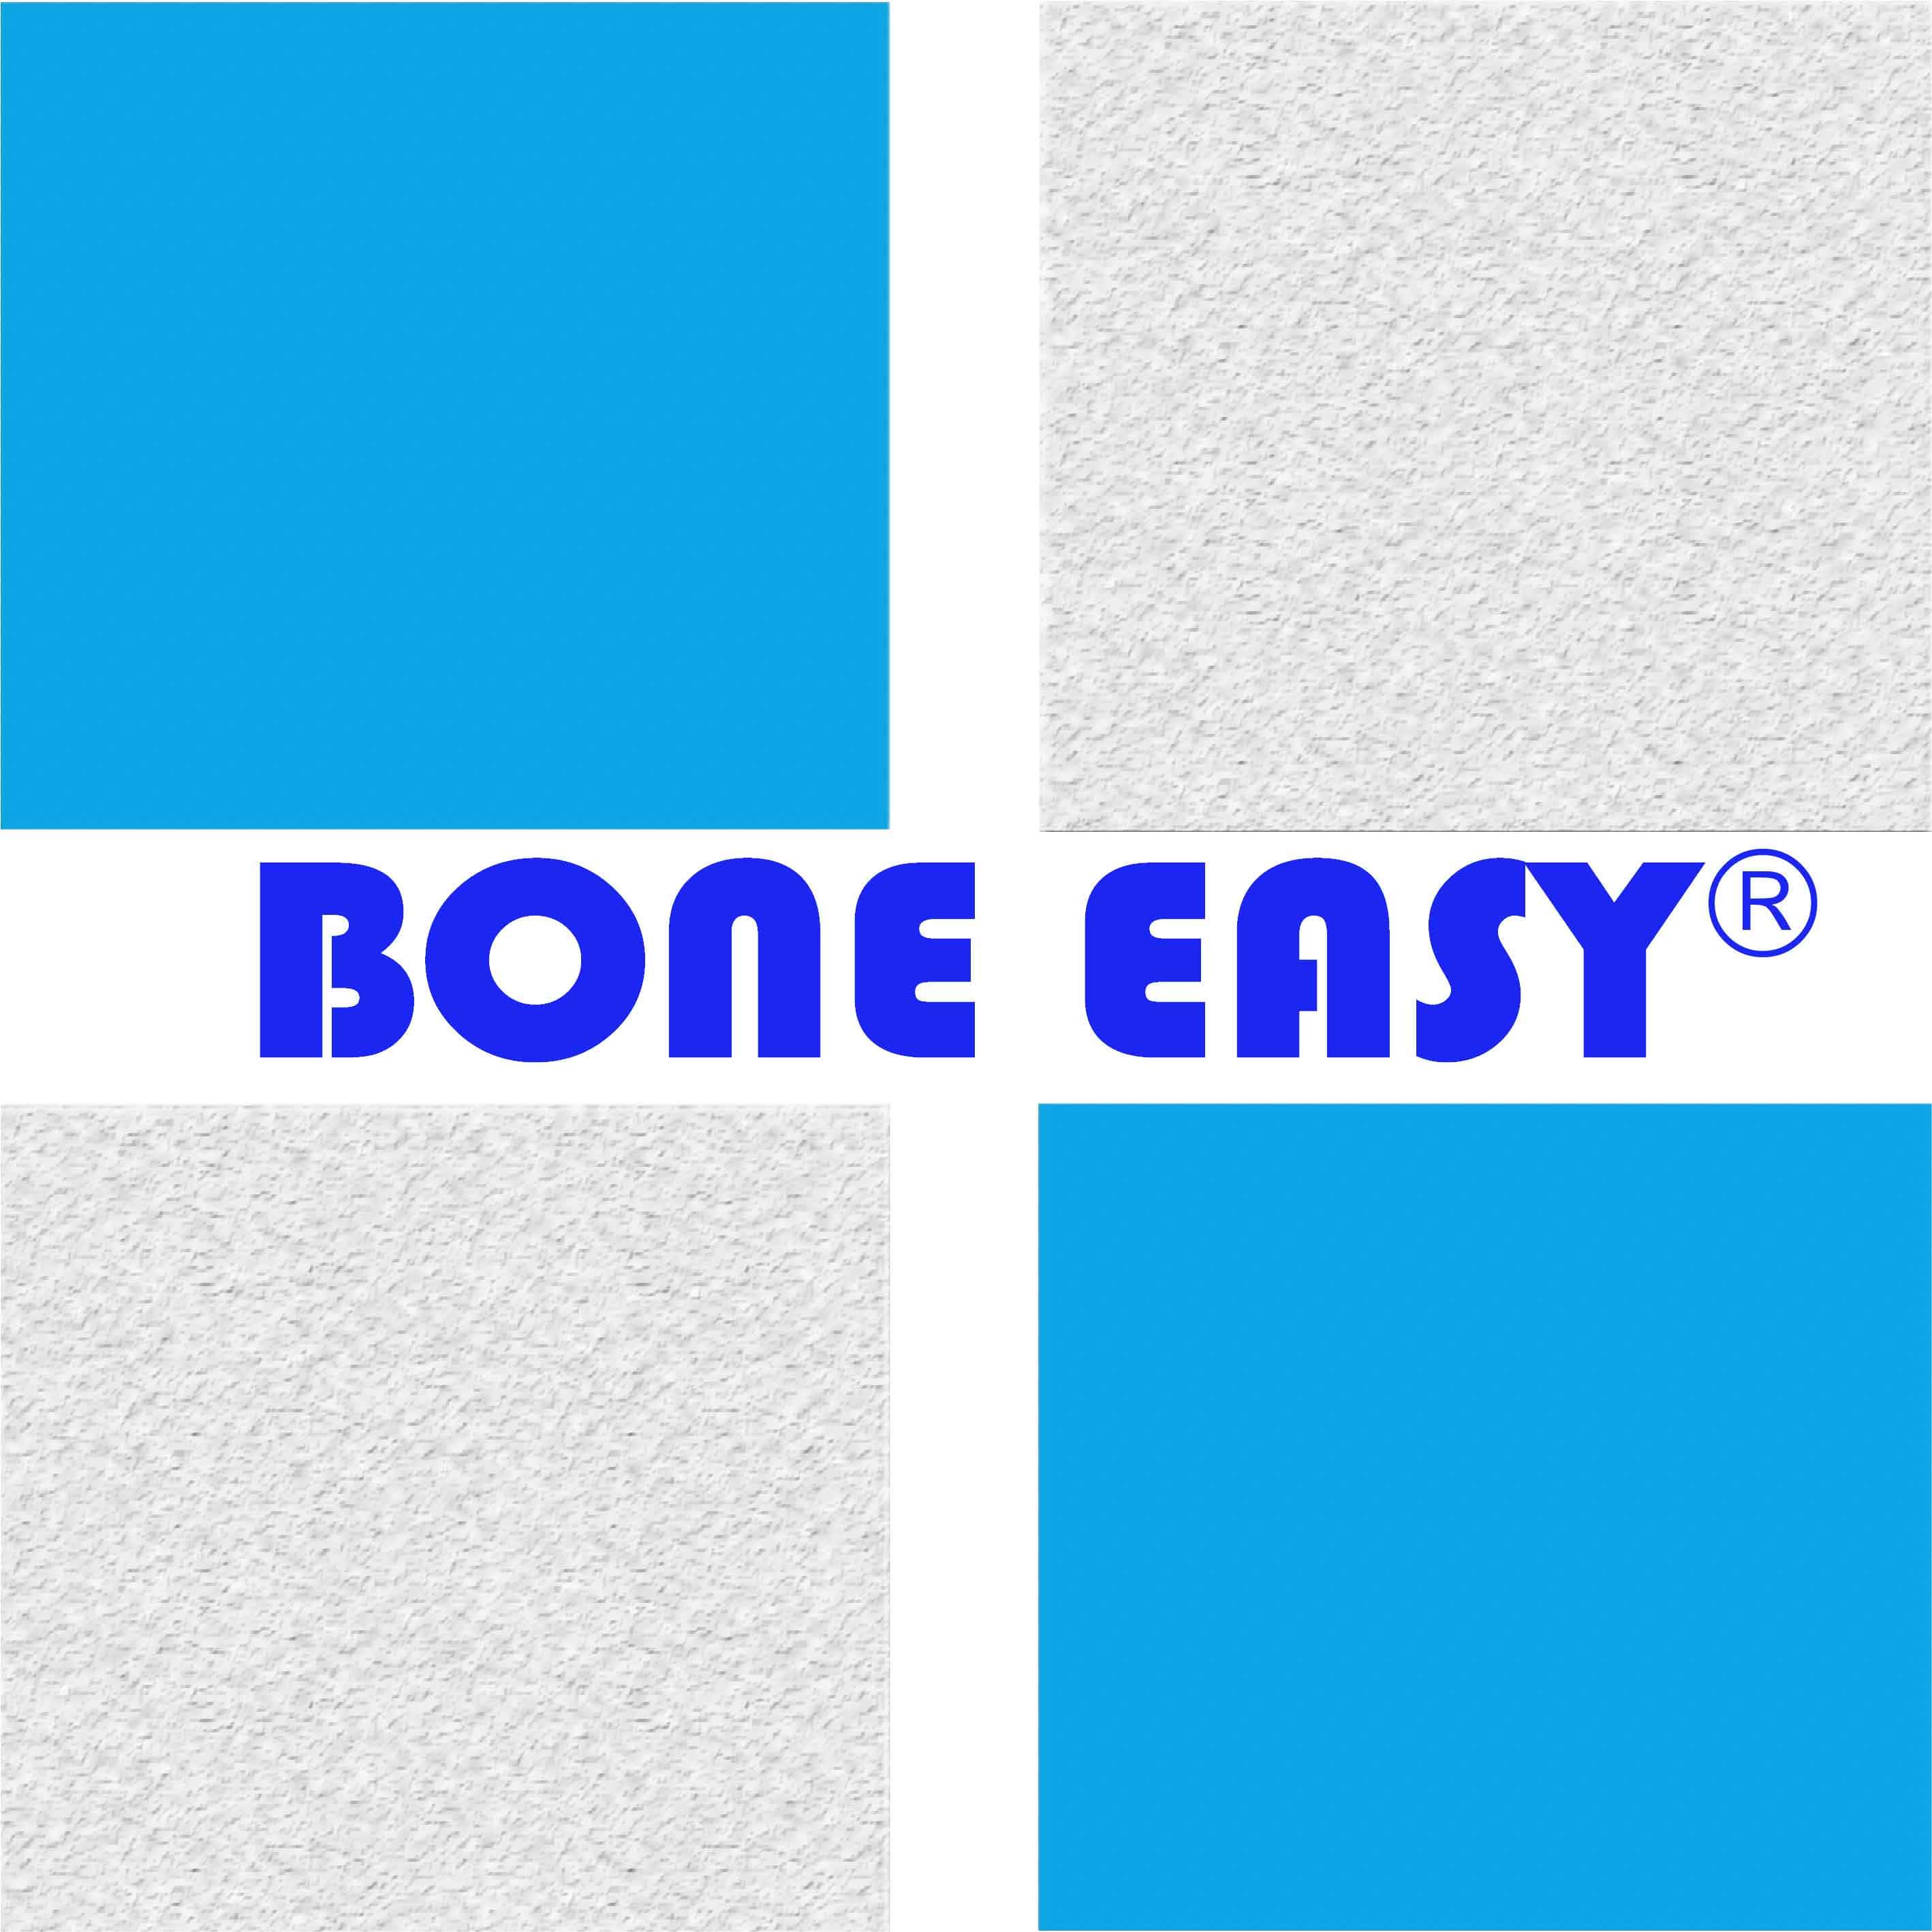 Bone Easy